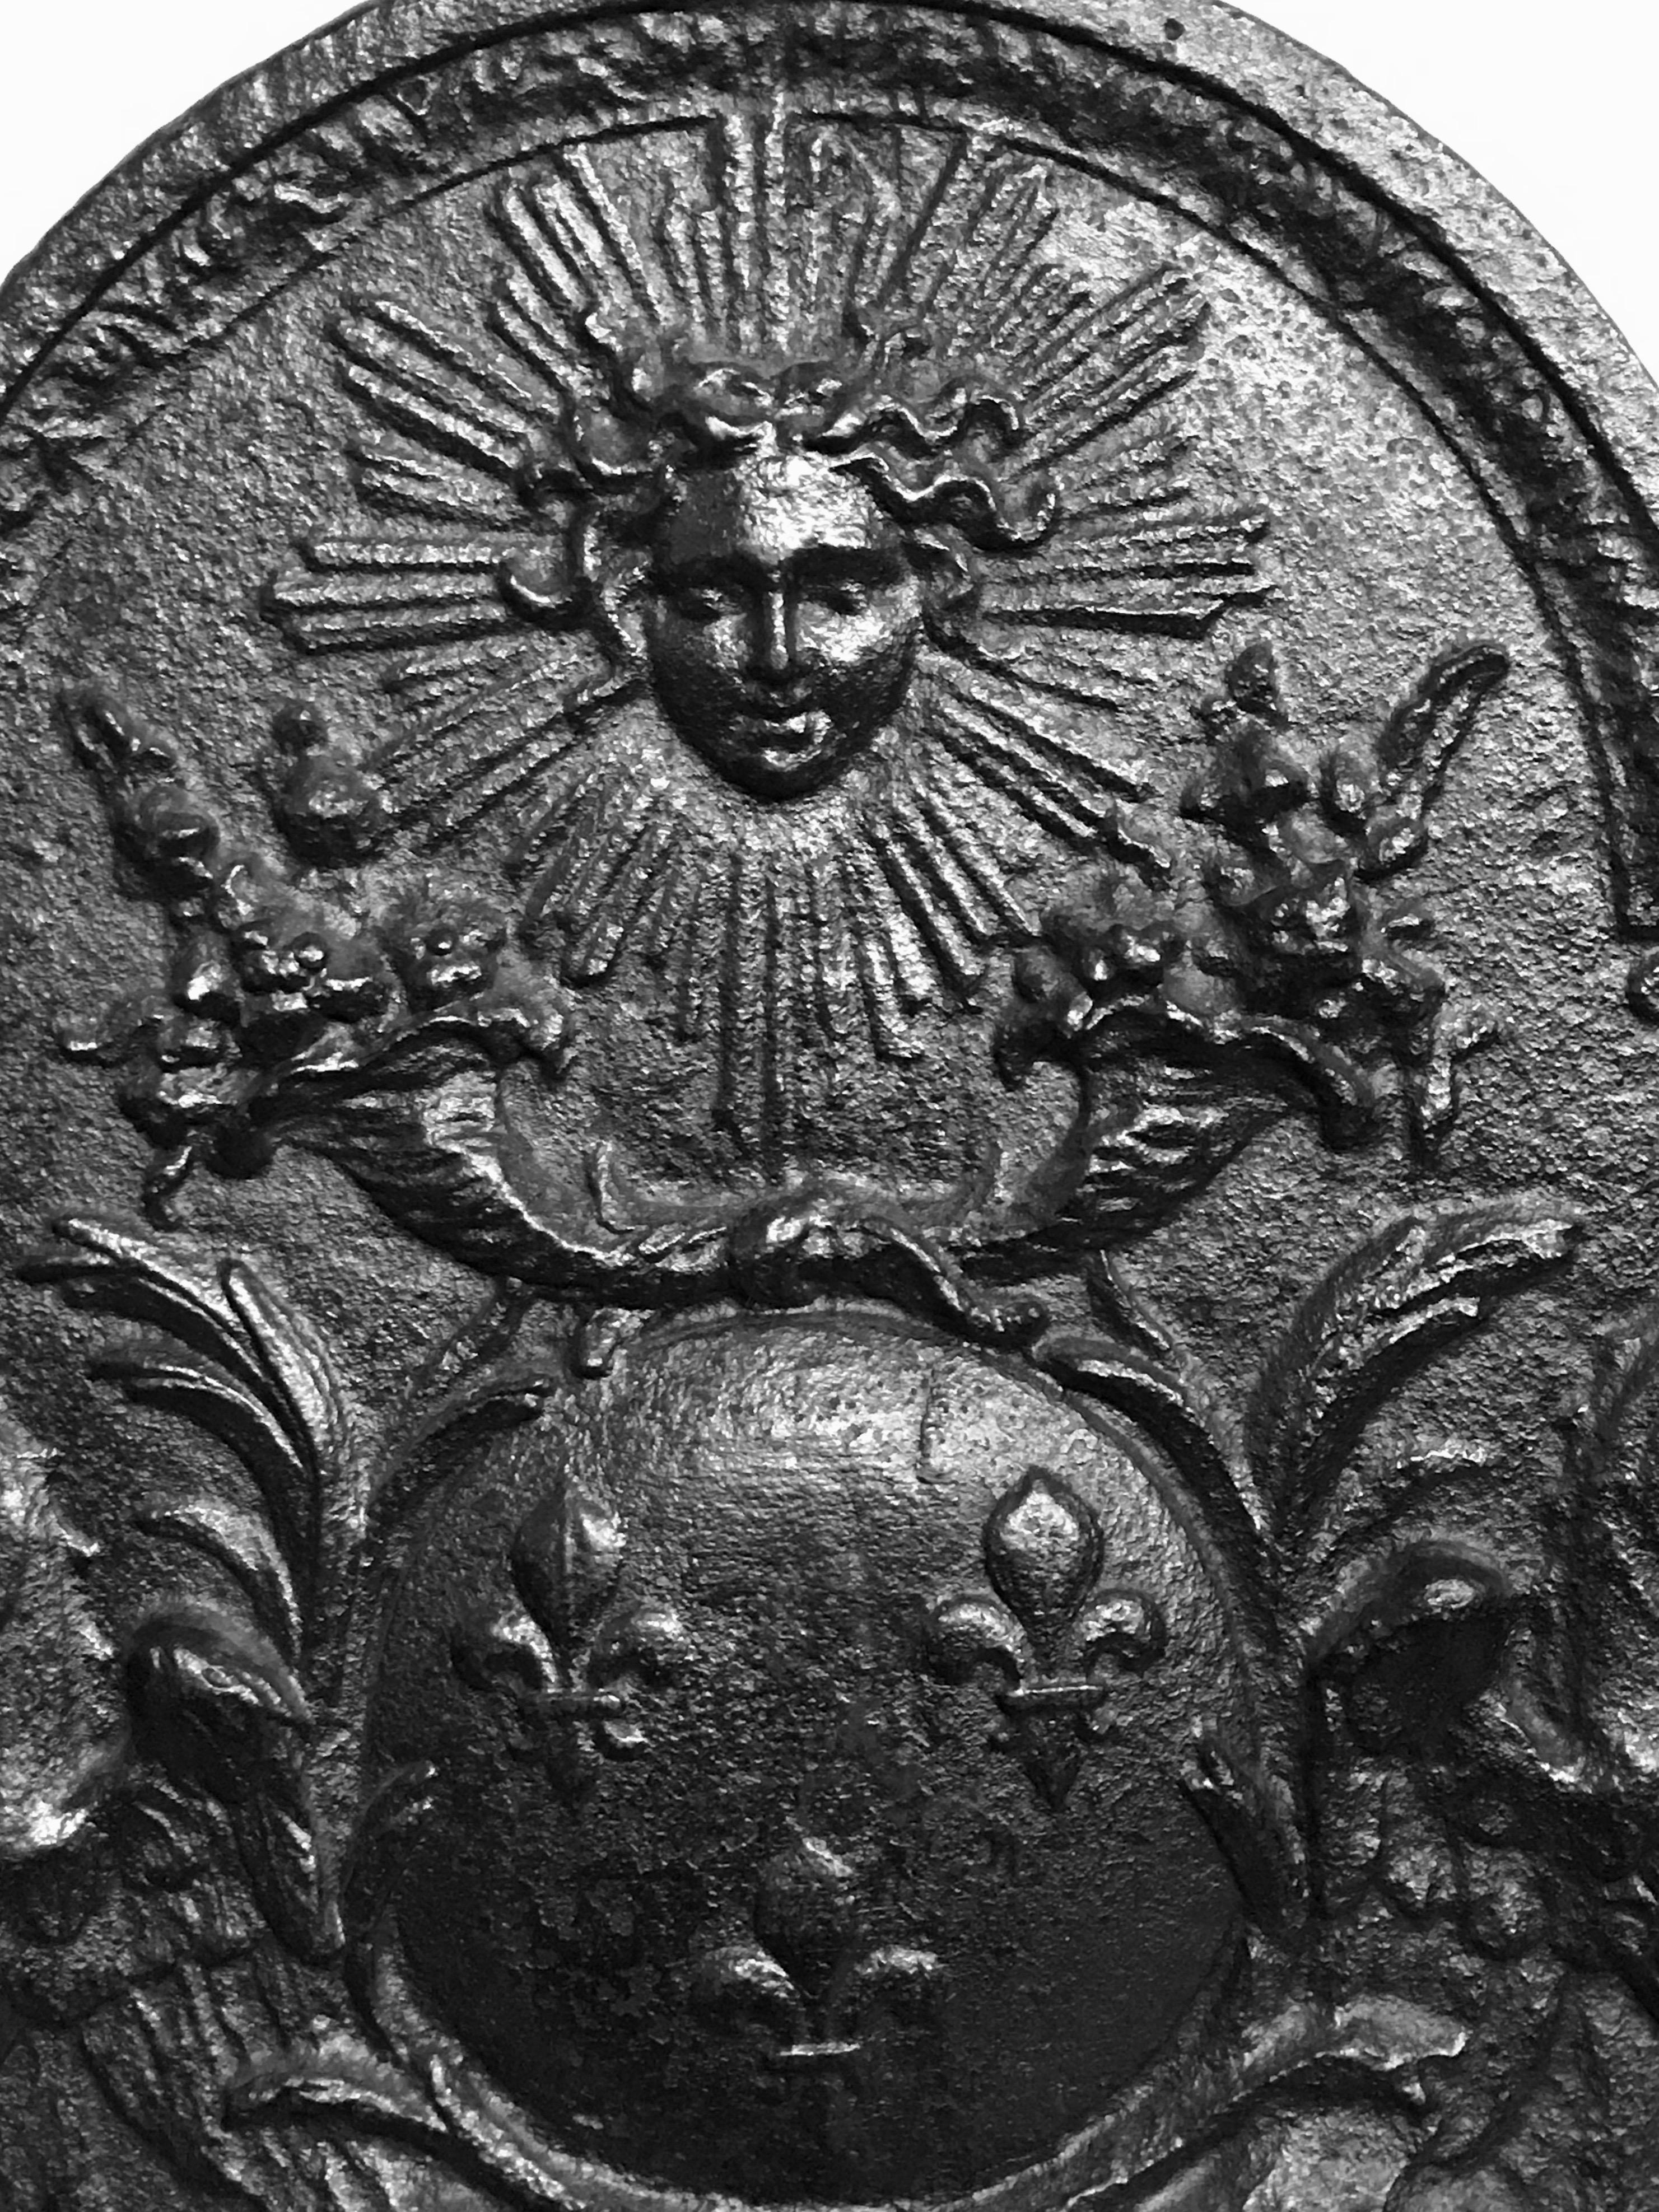 19th Century Louis XIV Cast Iron Fireback Featuring the Sun King and Royal Heraldic Symbols